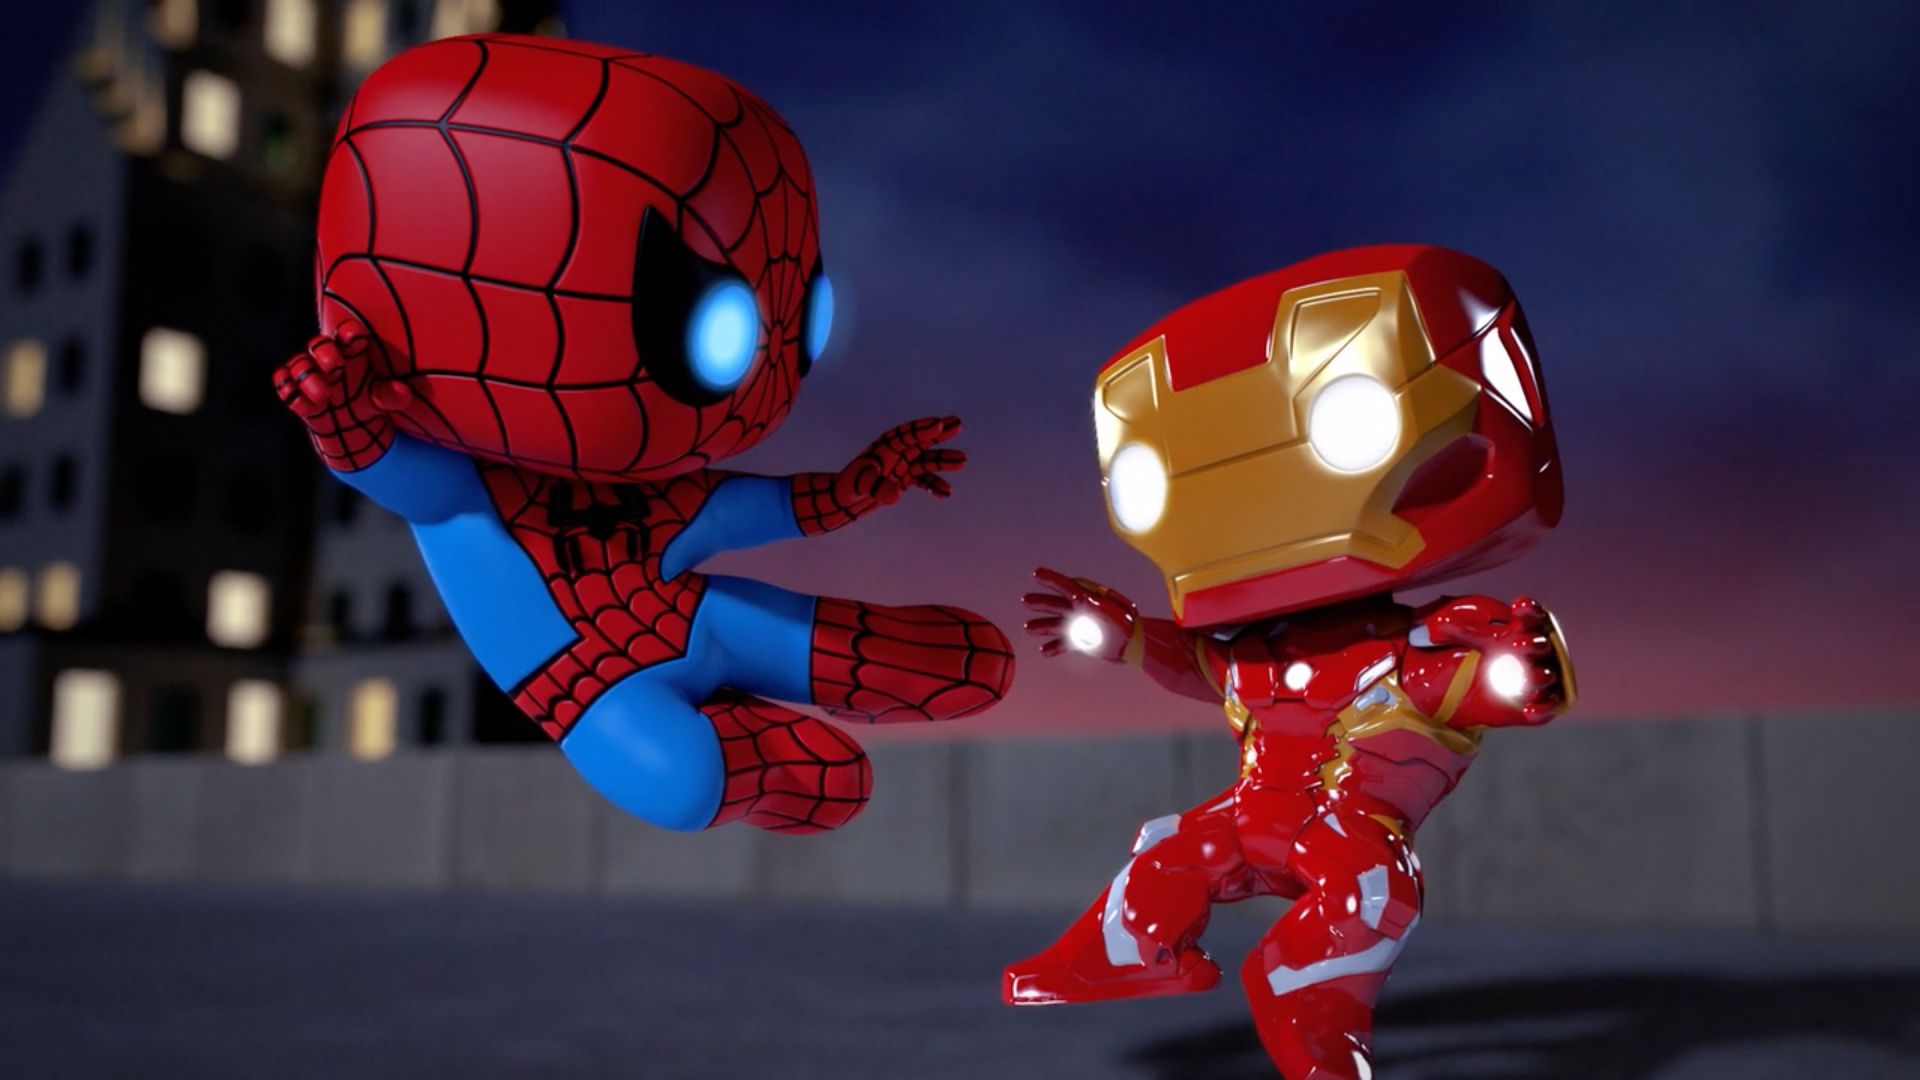 Desktop Wallpaper Iron Man Vs Spider Man Animated Artwork, Hd Image,  Picture, Background, Ld4suh